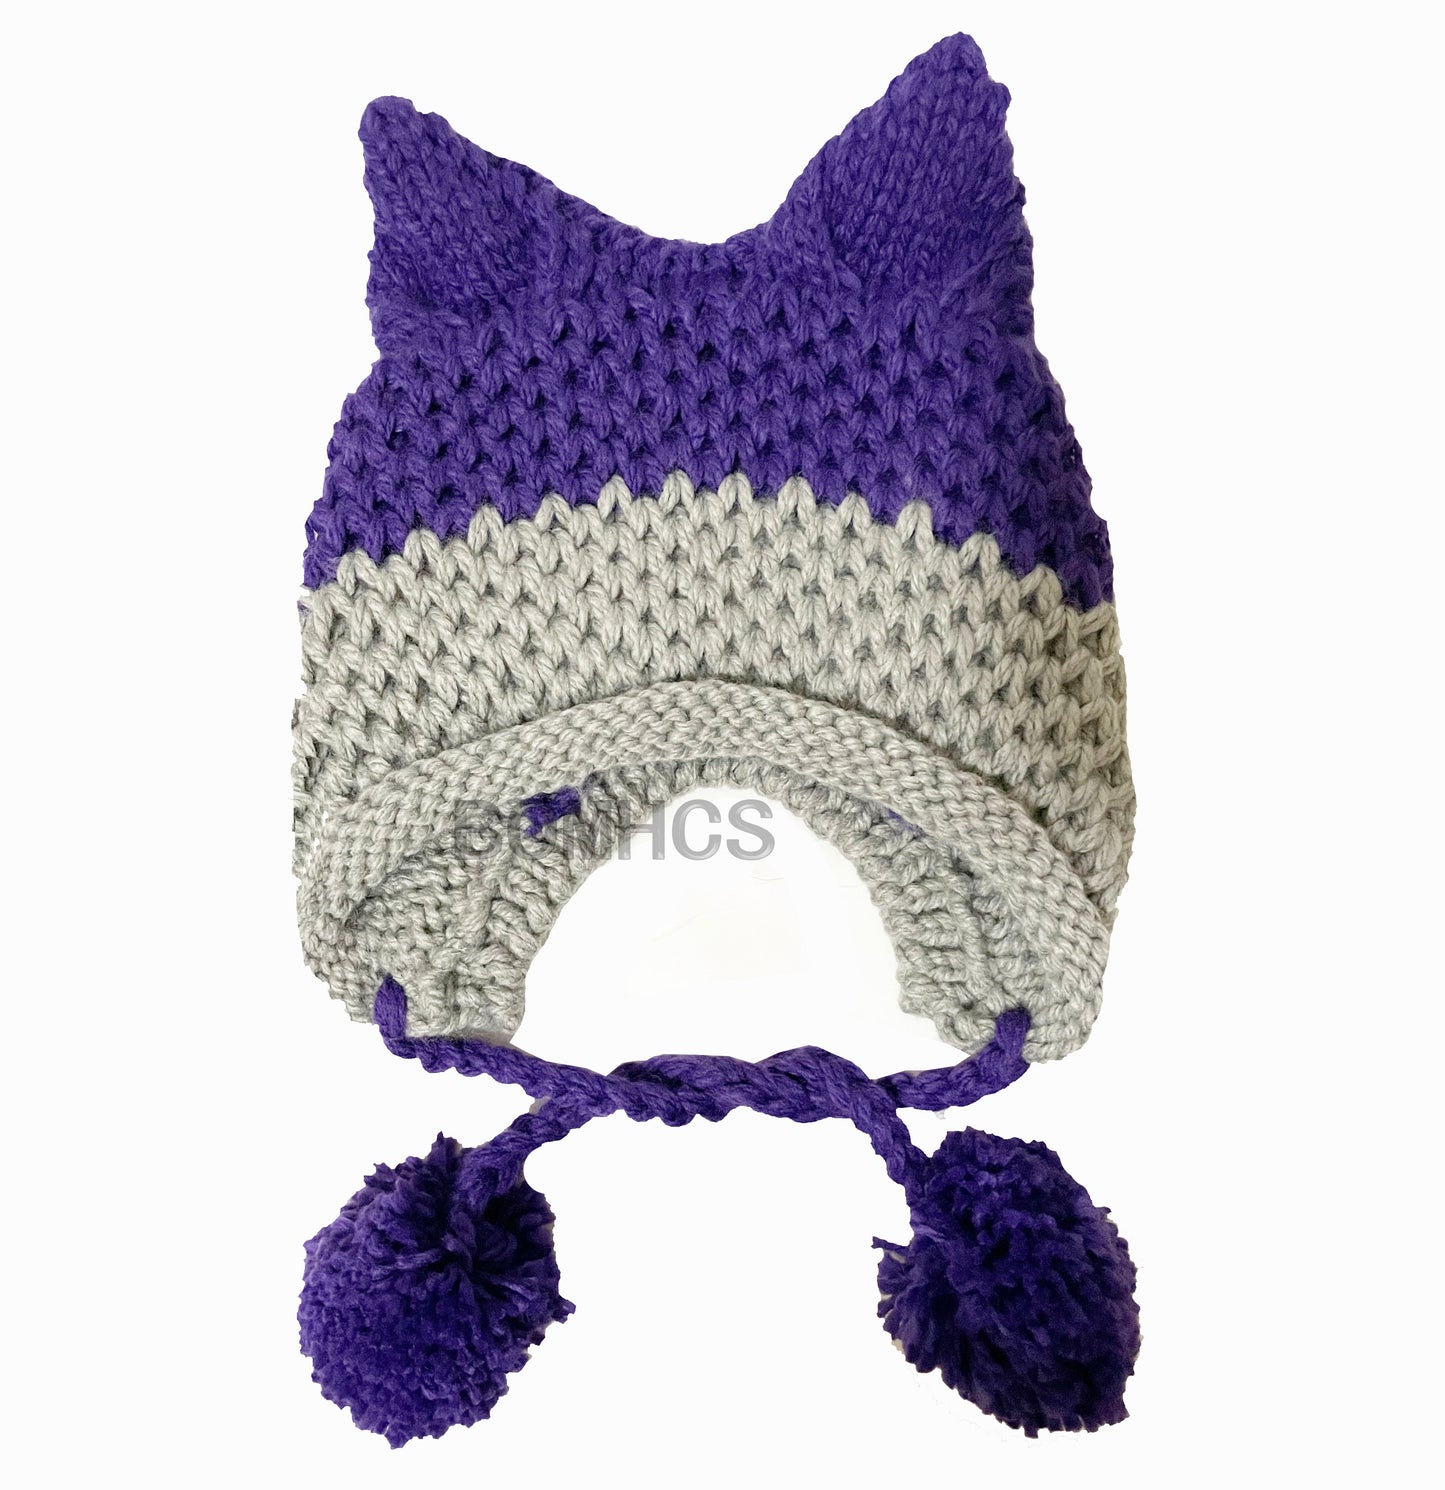 BomHCS So Cute Fox Ears Beanie - 100% Handmade Knit Hat.